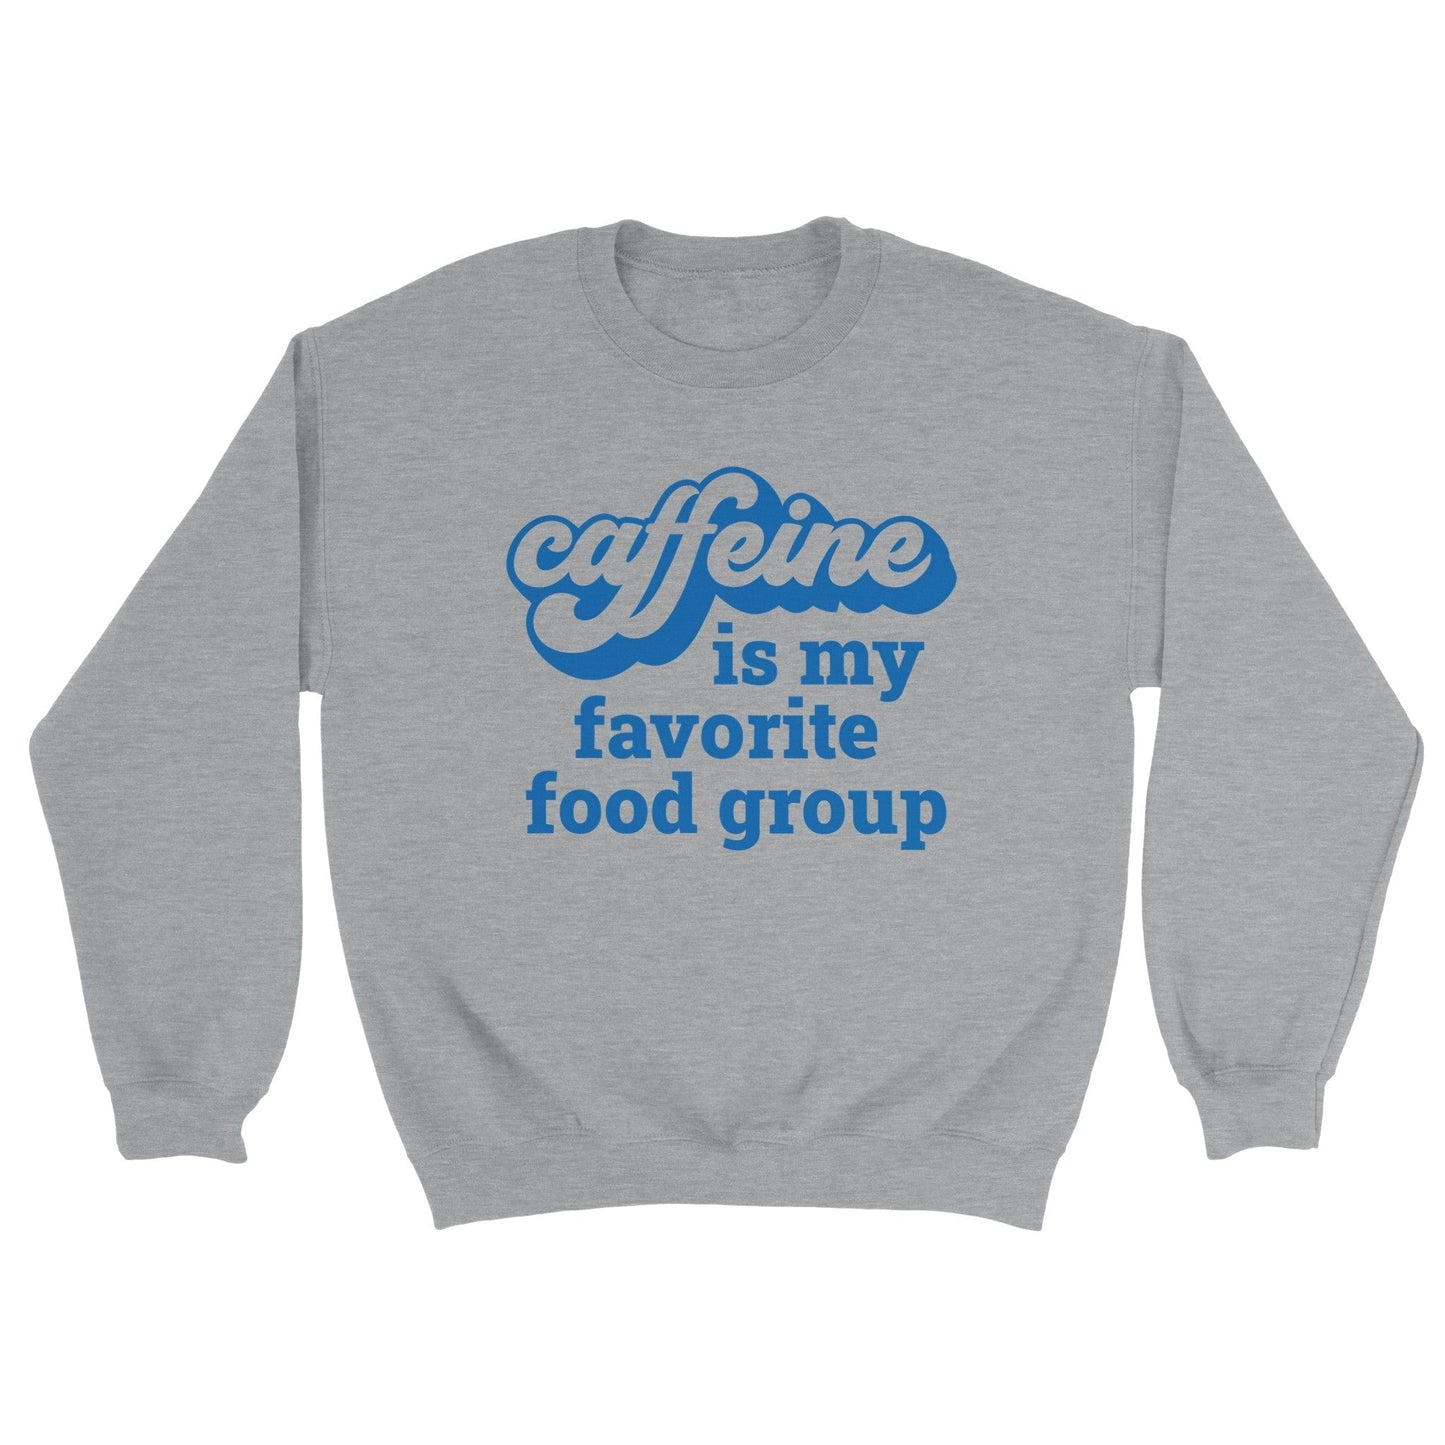 Good Bean Gifts "Caffeine is my favorite food group" Unisex Crewneck Sweatshirt S / Sports Grey